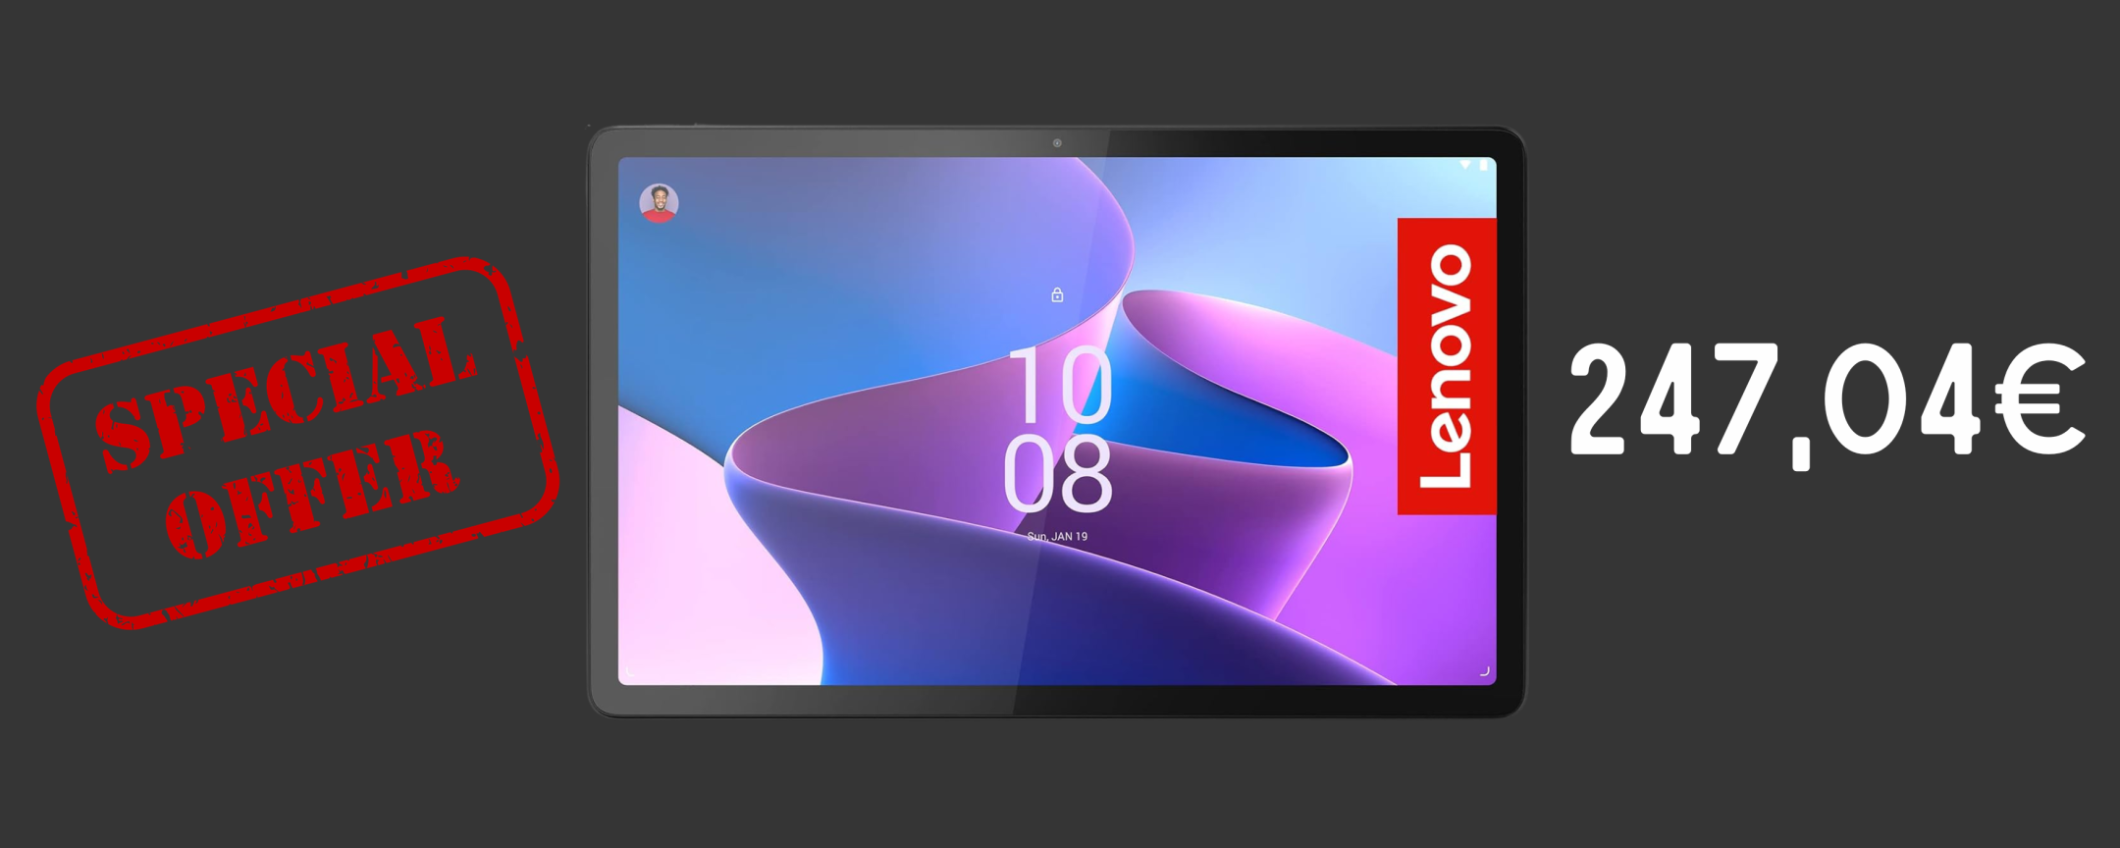 Lenovo Tab P11 con display 2K e 128 GB a SOLI 247,04€